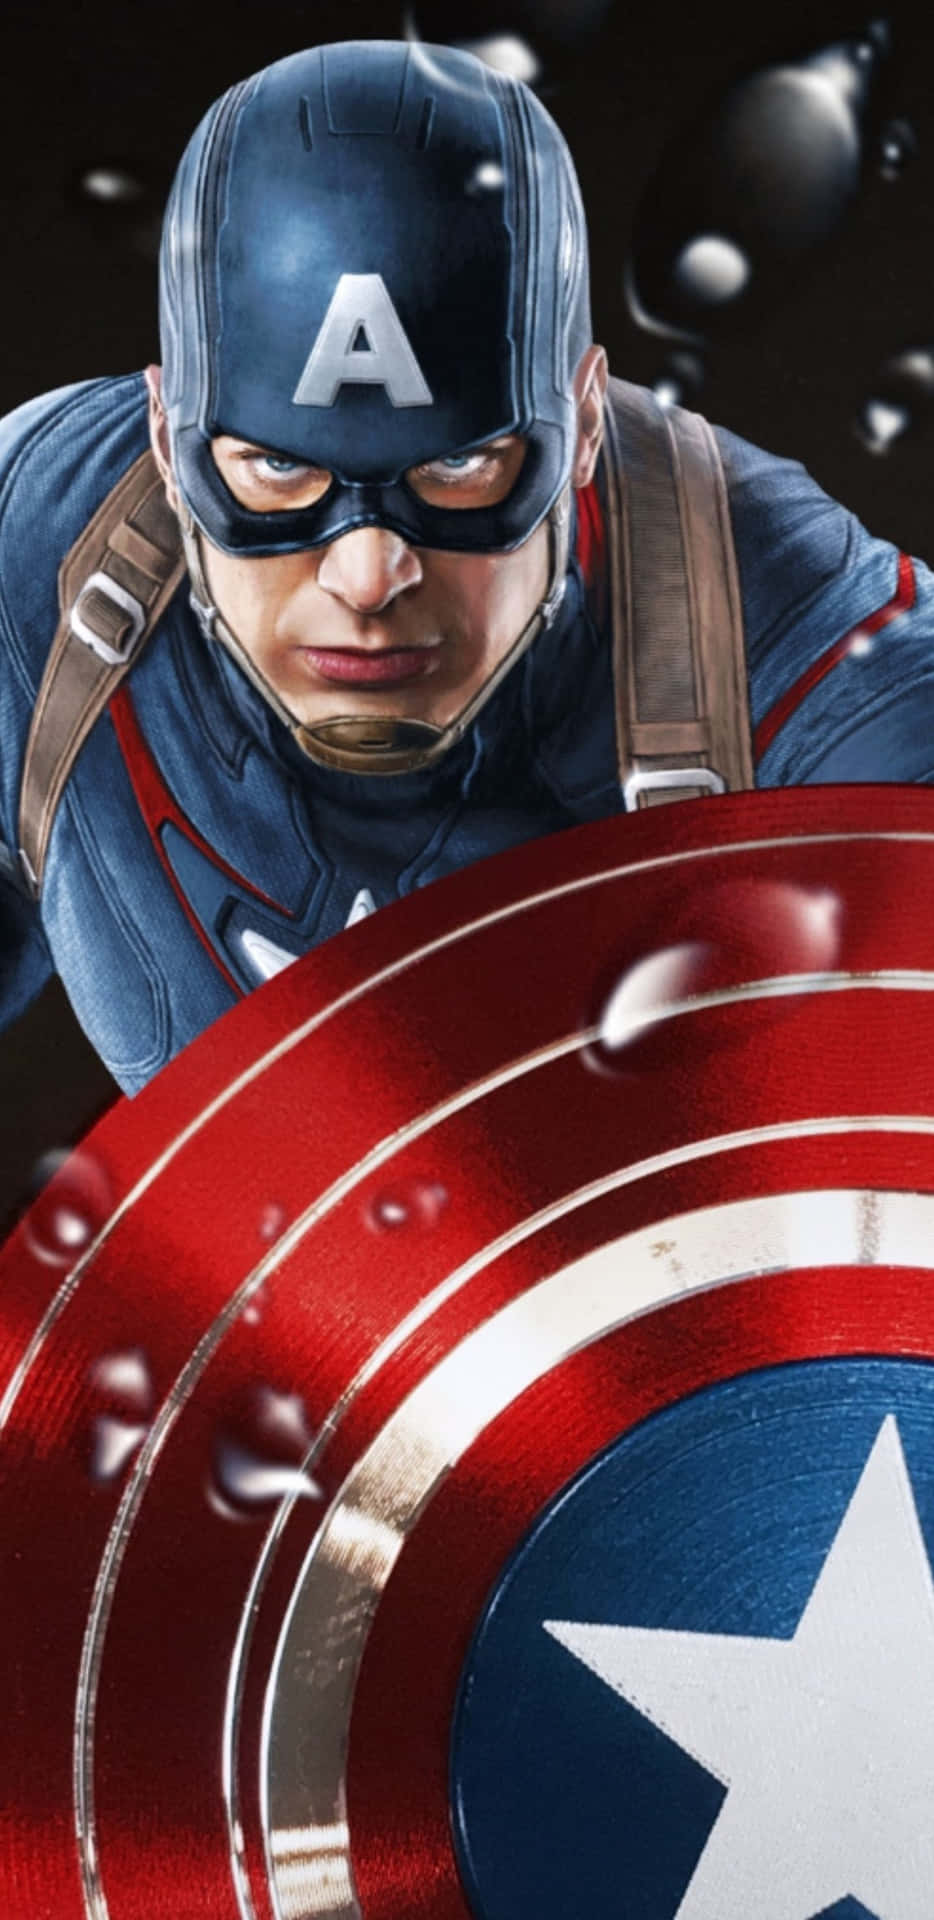 Pixel3xl Hintergrundbild Captain America Avengers Age Of Ultron